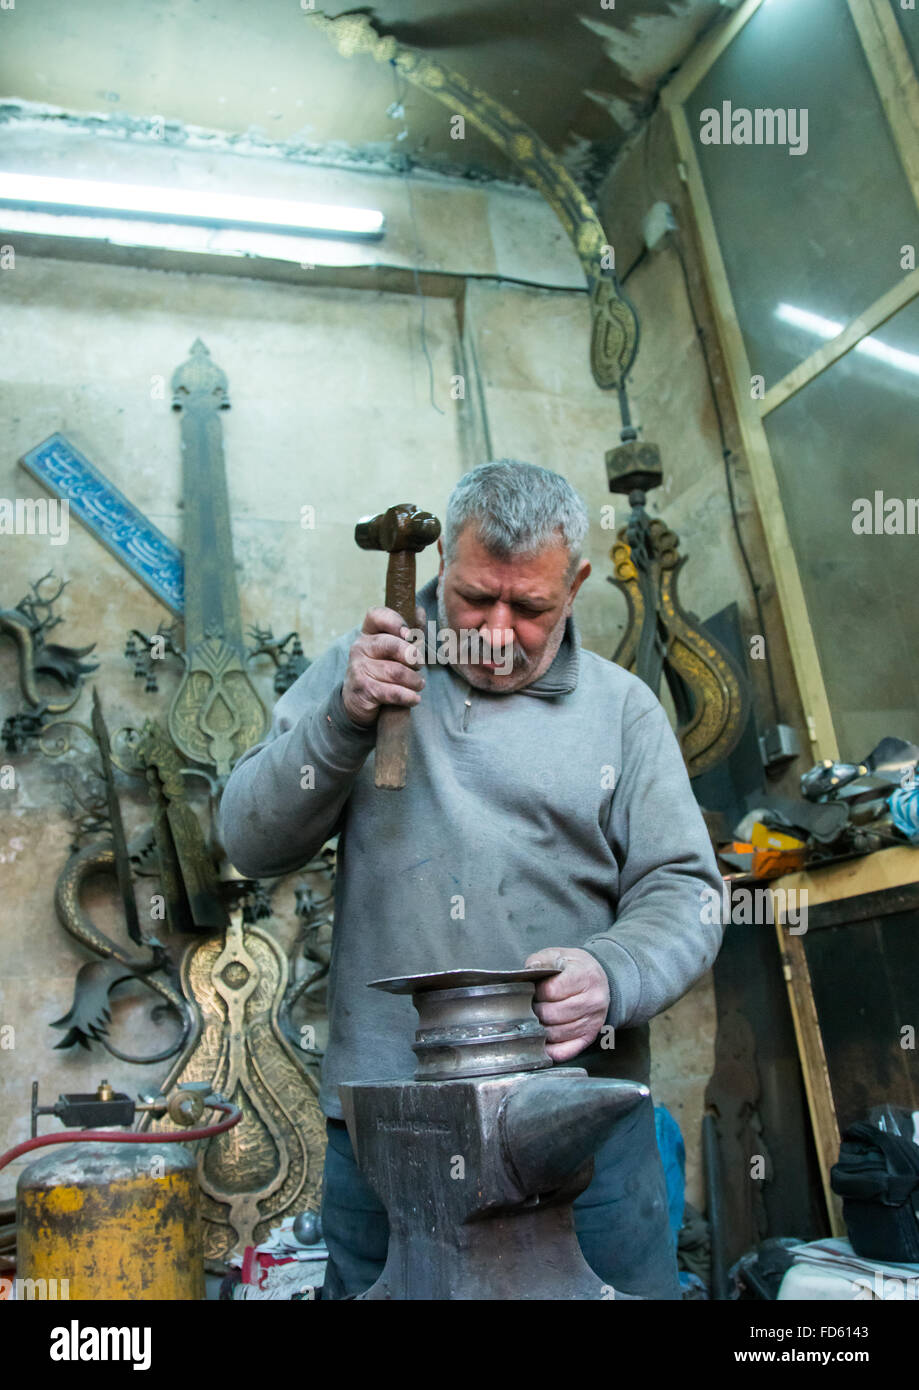 master safar fooladgar creating an alam in his workshop, Central district, Tehran, Iran Stock Photo